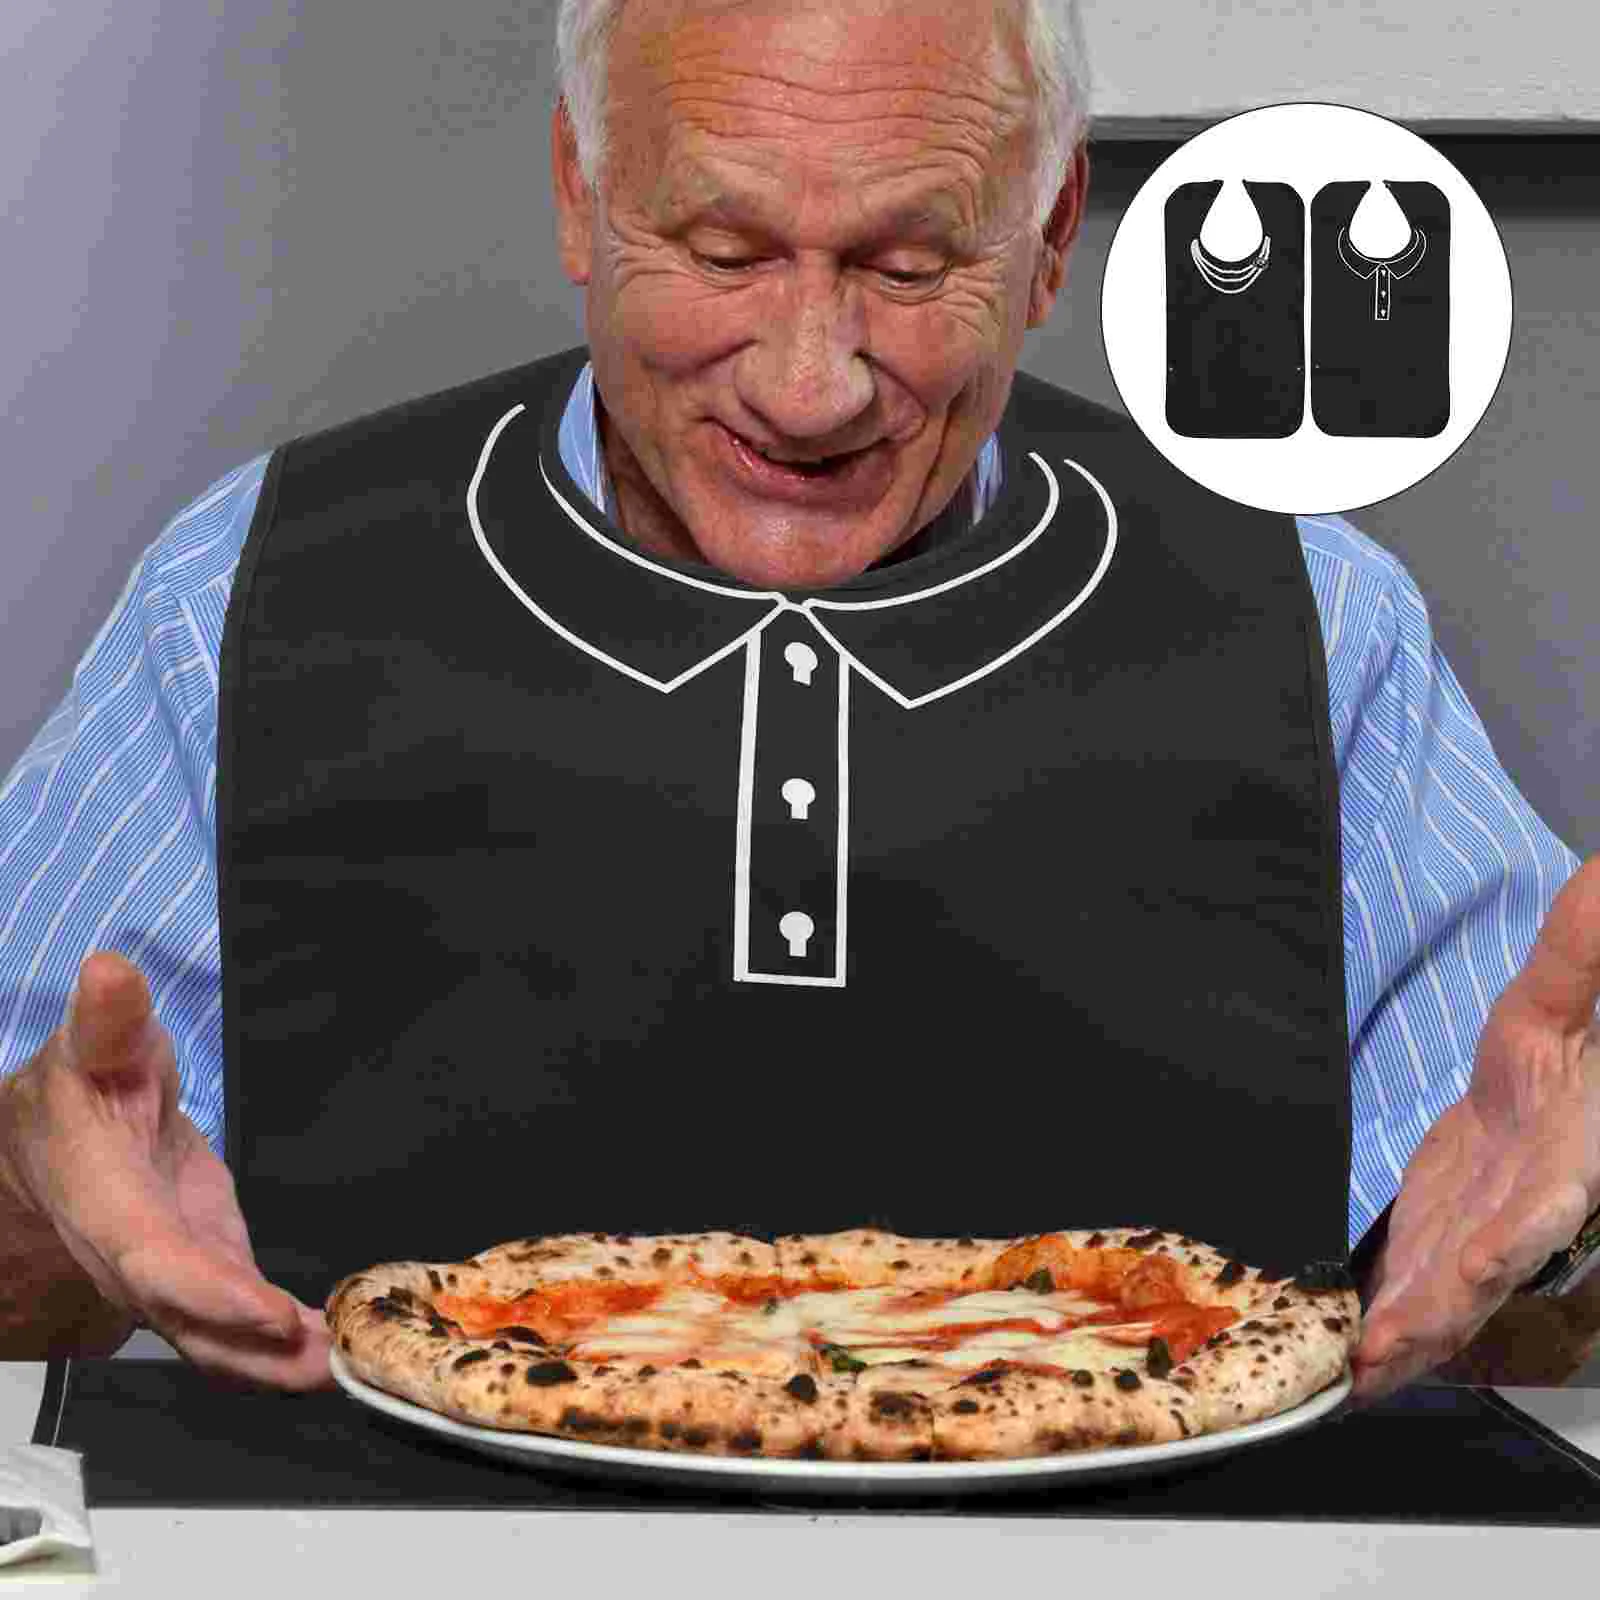 

Bibs Adult Bib Eating Seniors Adults Elderly Mealtime Feeding Nursing Apron Crumb Washable Waterproof Reusable Catcher Dining